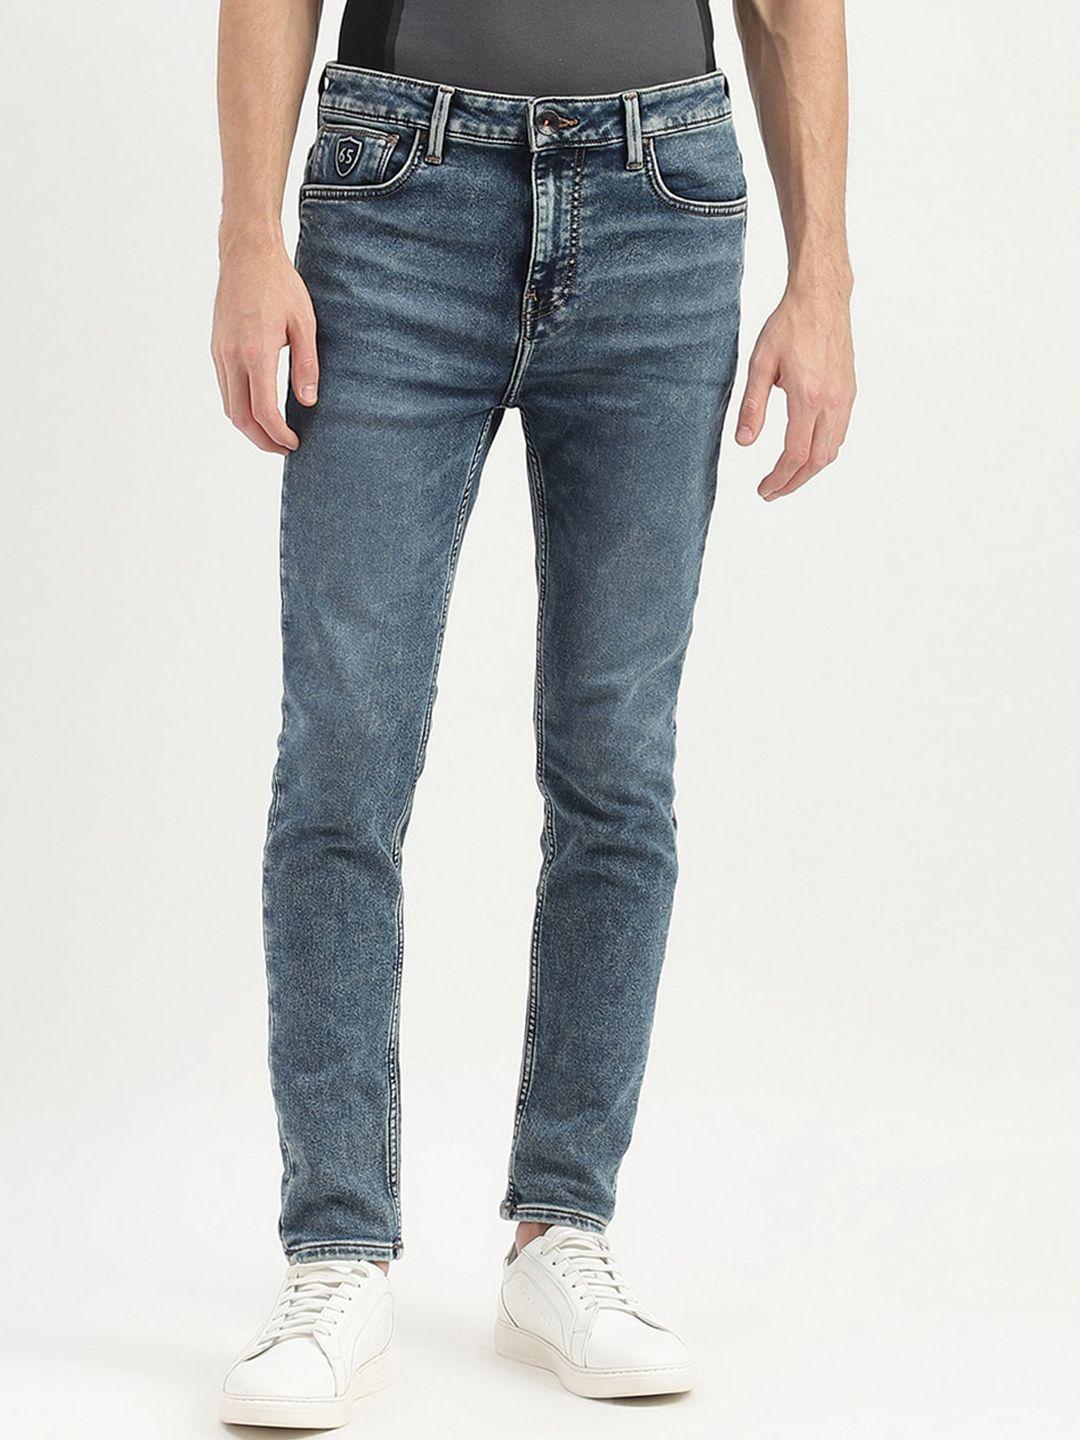 united-colors-of-benetton-men-mid-rise-light-fade-cotton-jeans